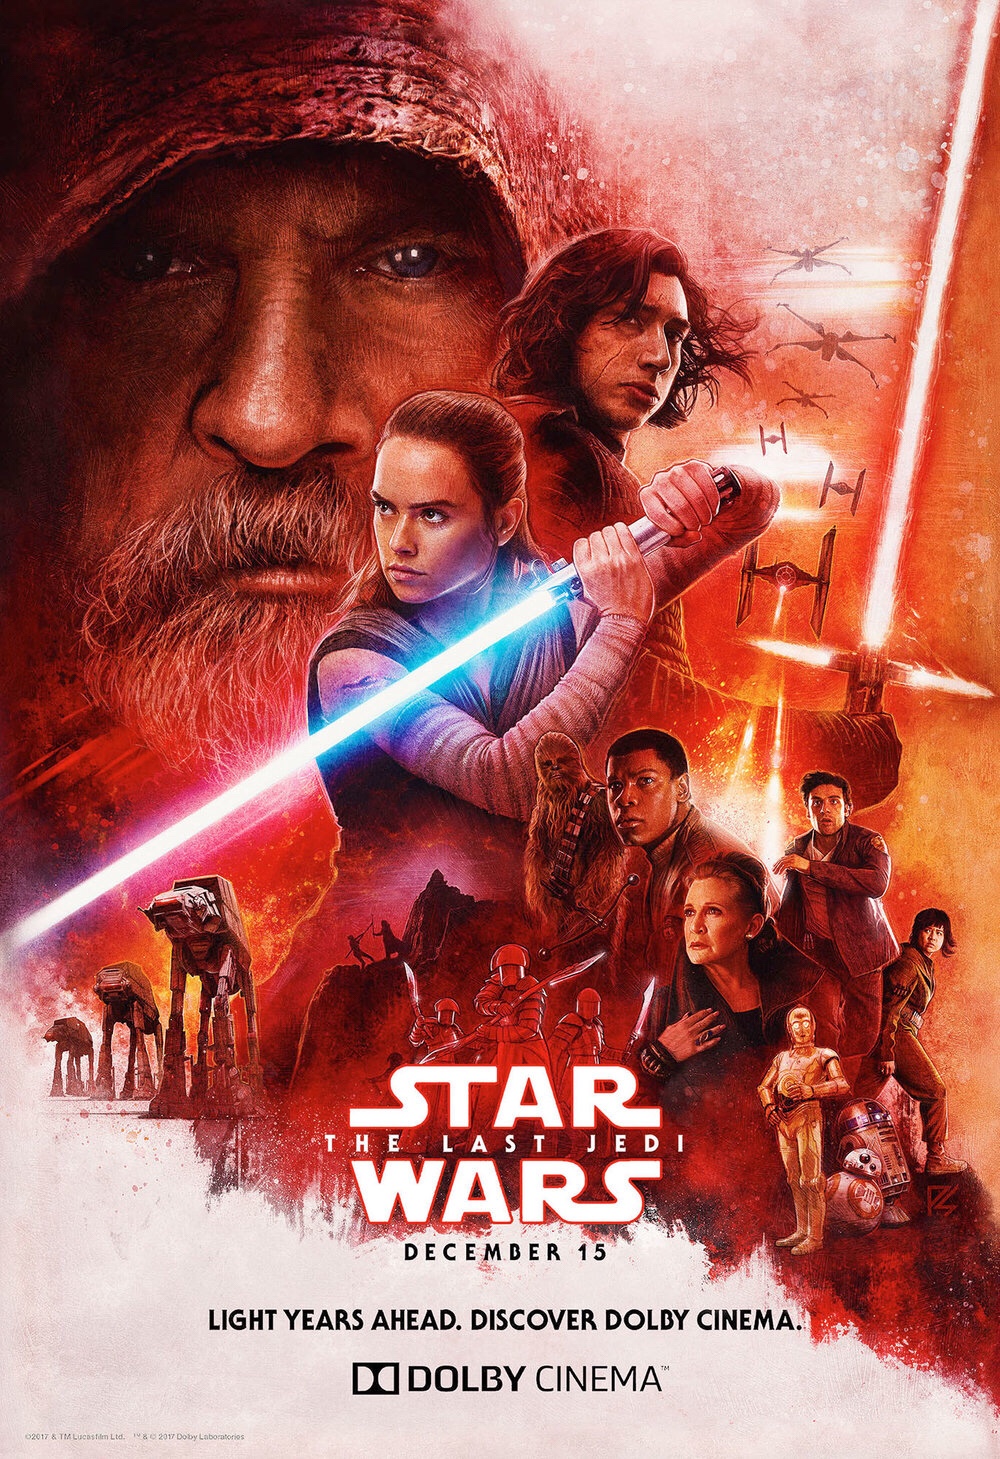 Star Wars - The Last Jedi Poster by Paul Shipper Studios